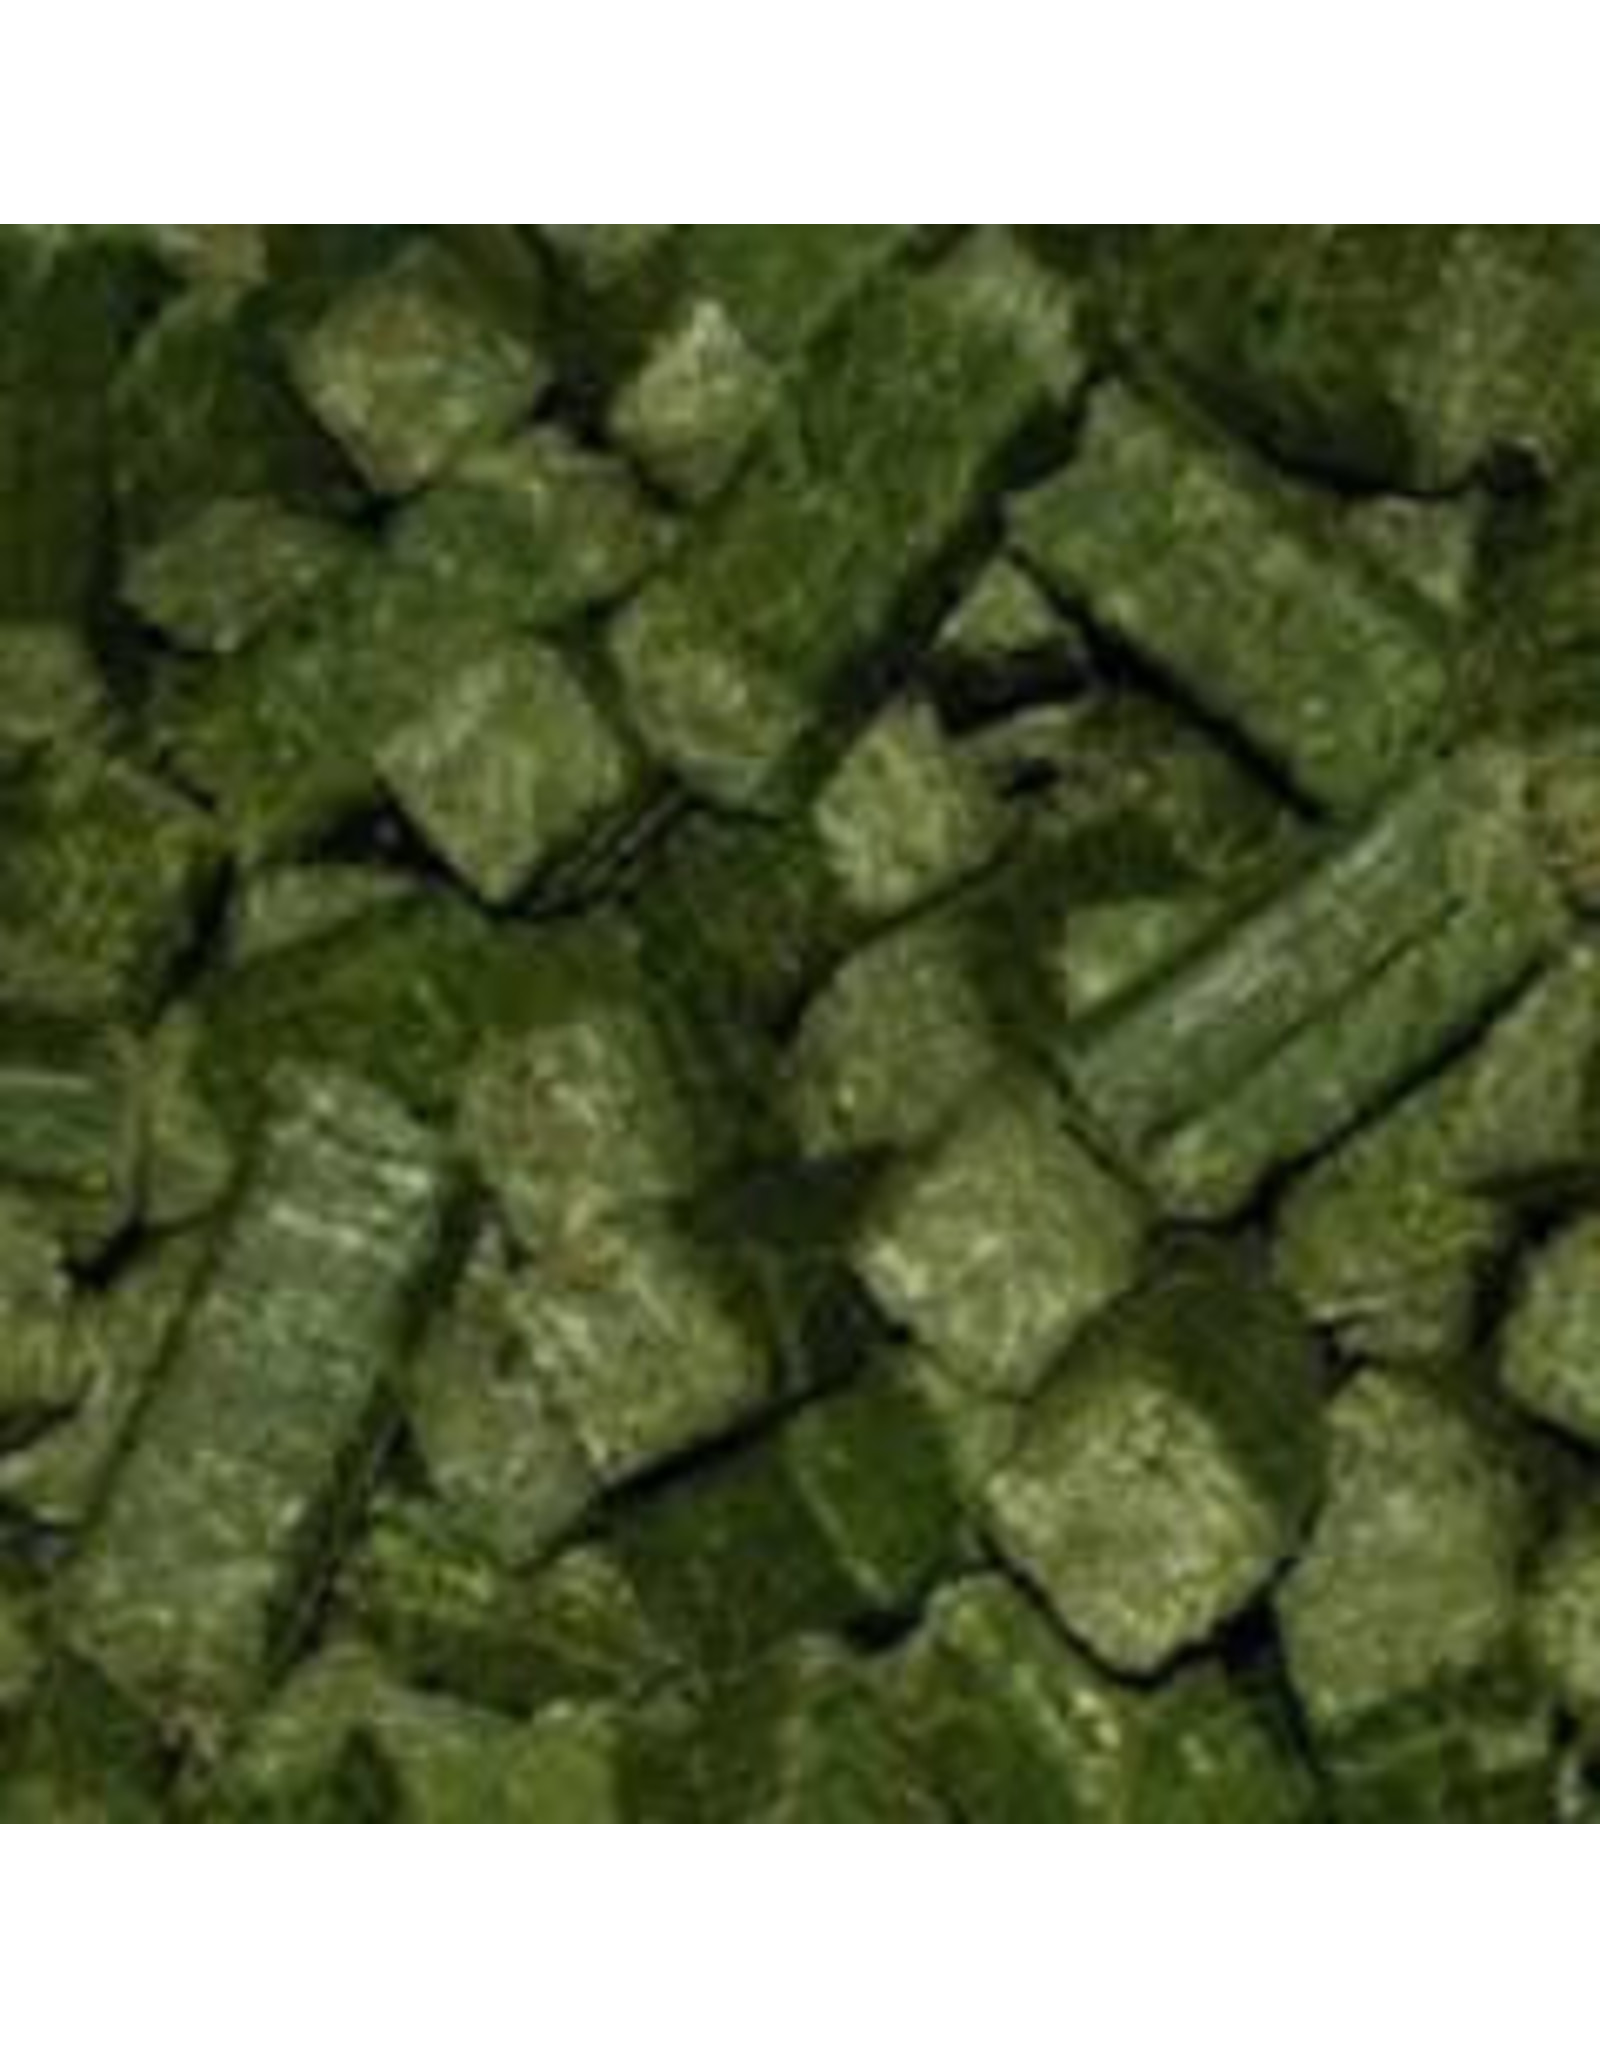 Sun Cured Sun Cured Alfalfa Cubes 50lb CP 16%, Fiber 32% Moisture 12% - 40 bags/pallet